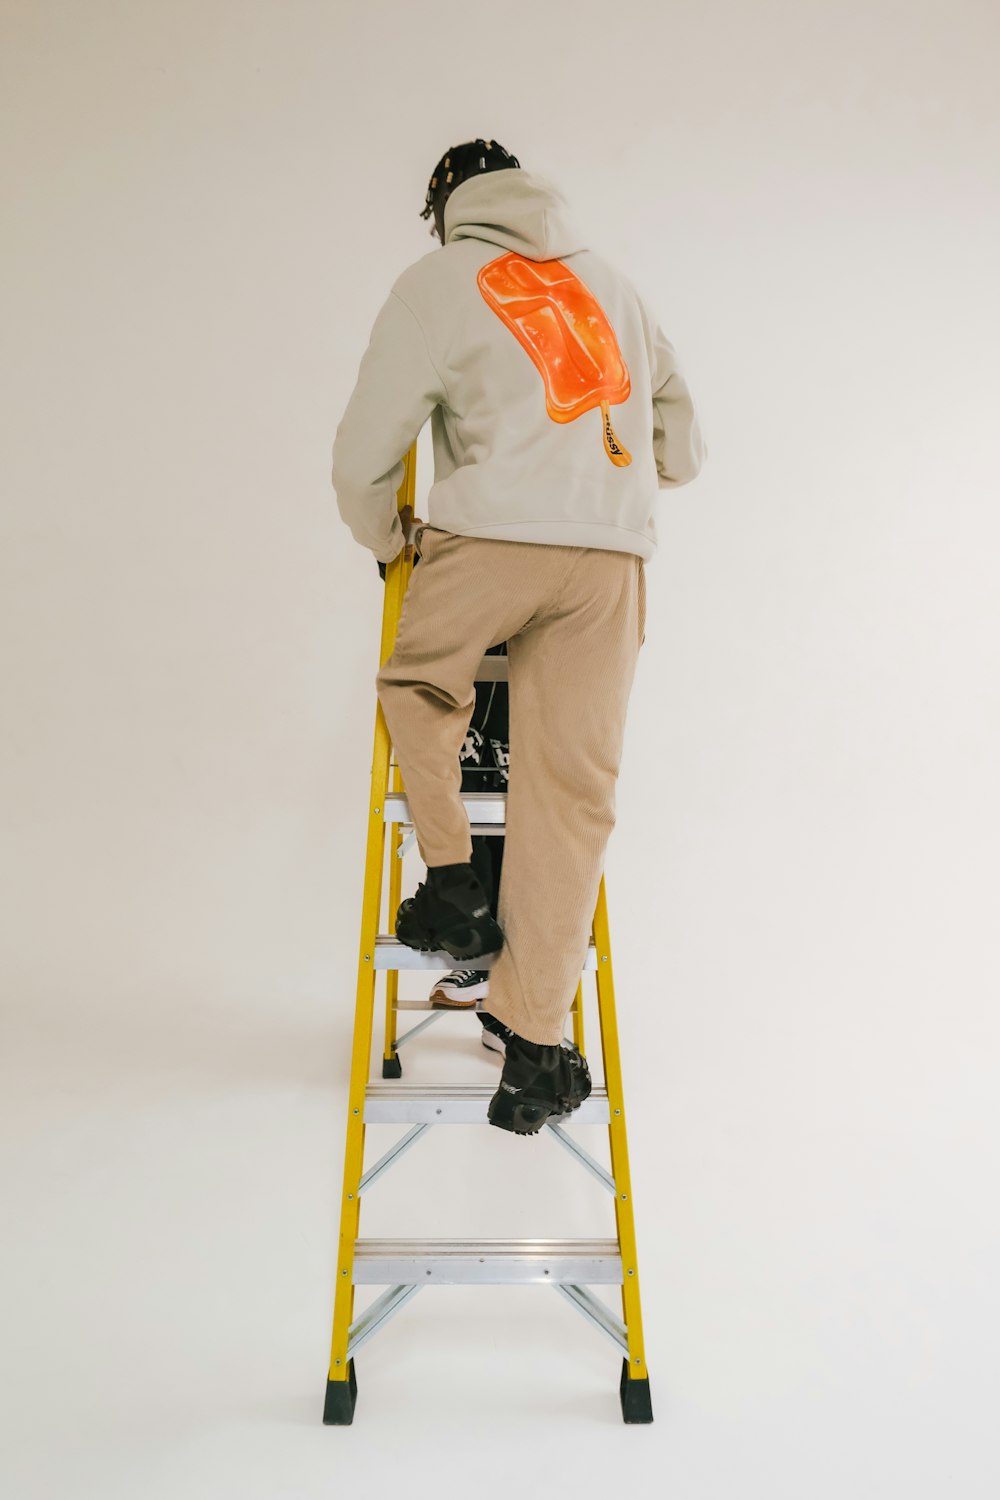 a man sitting on a yellow step ladder